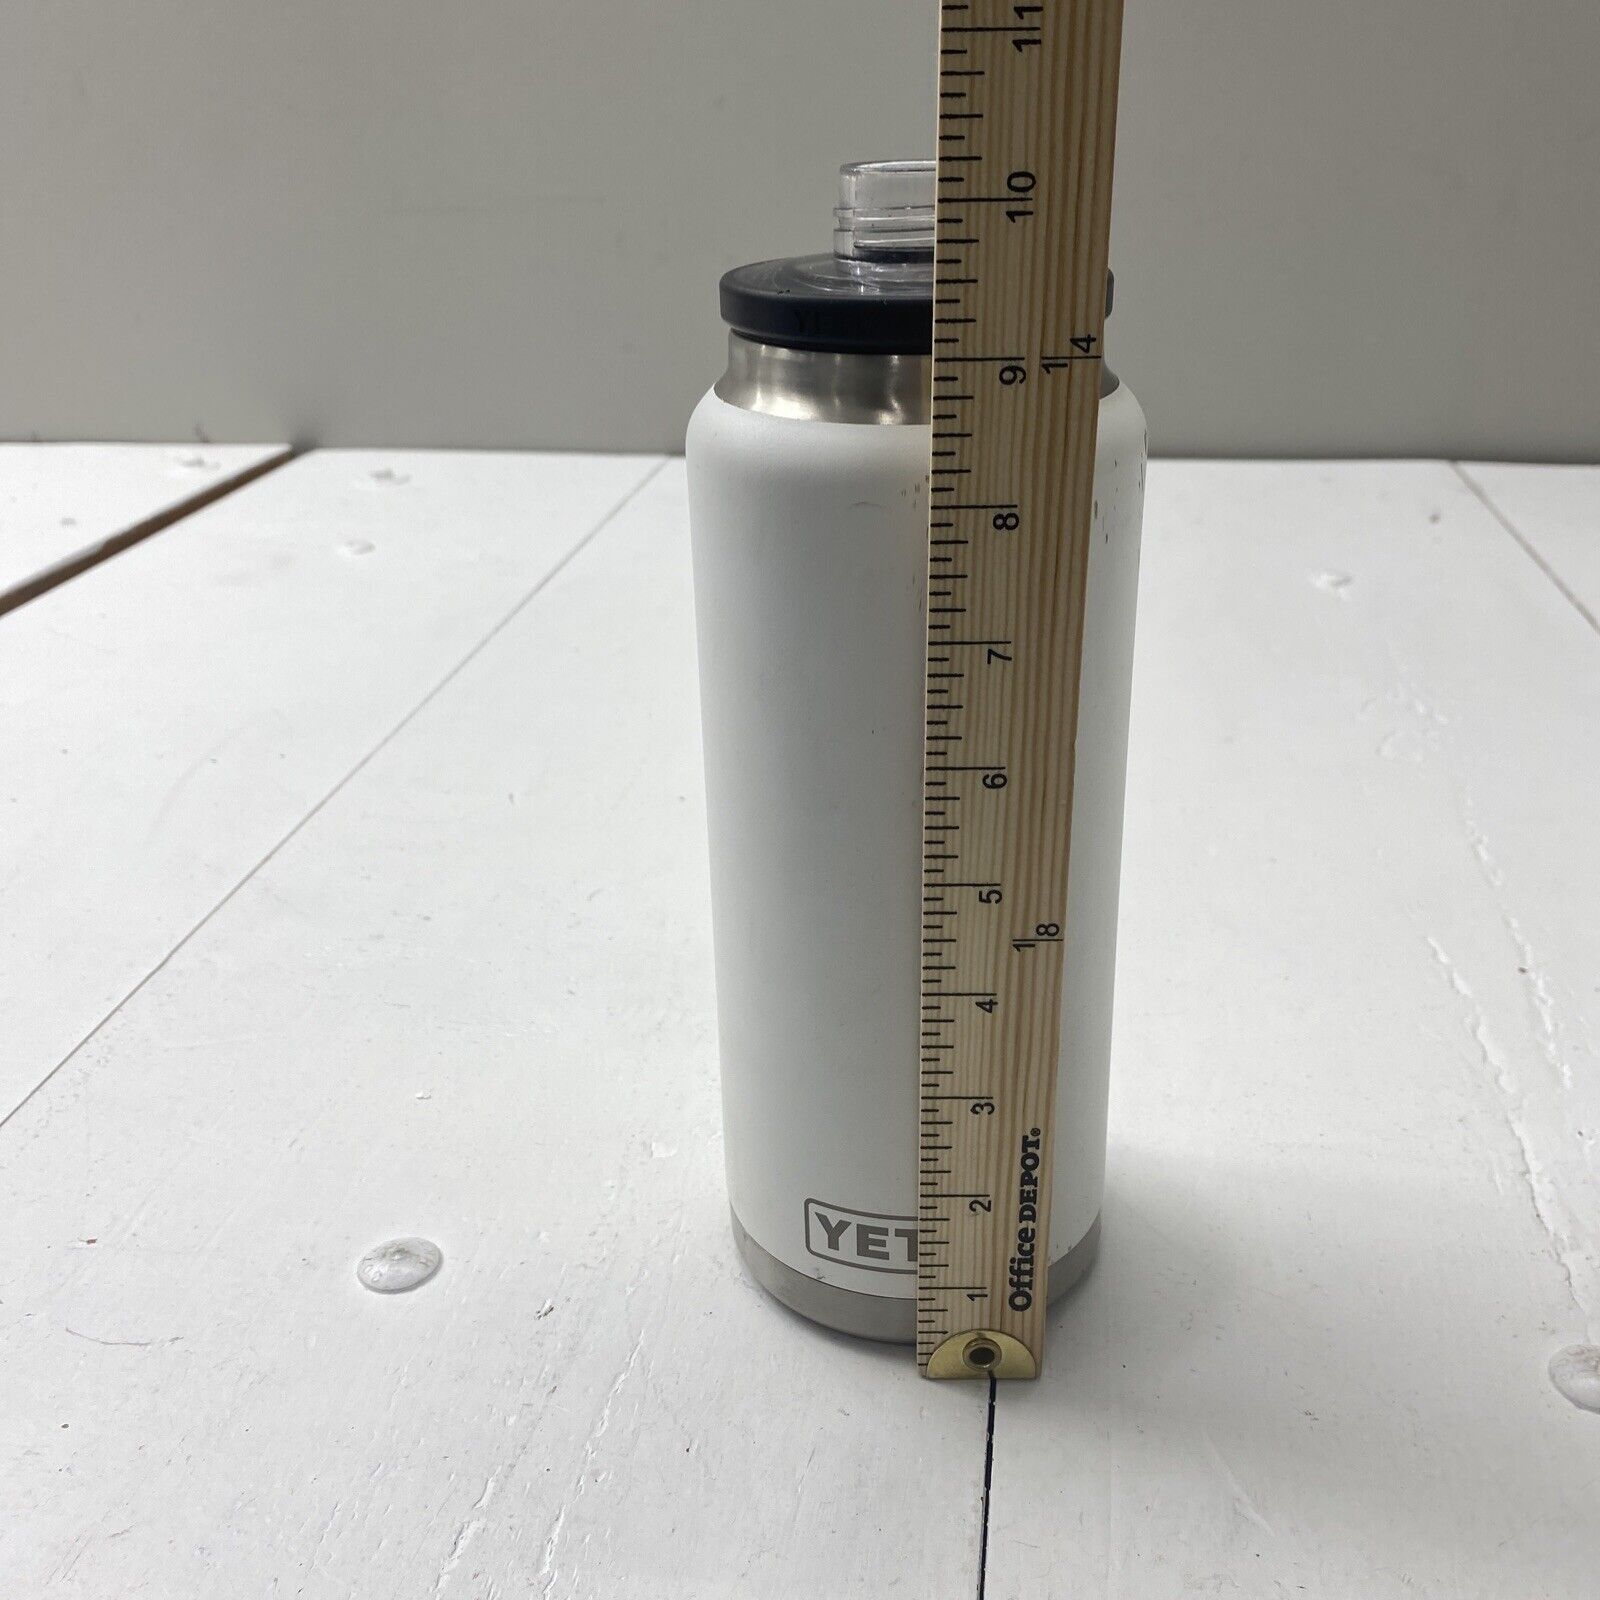 YETI Rambler 36 oz Bottle with Chug Cap - White